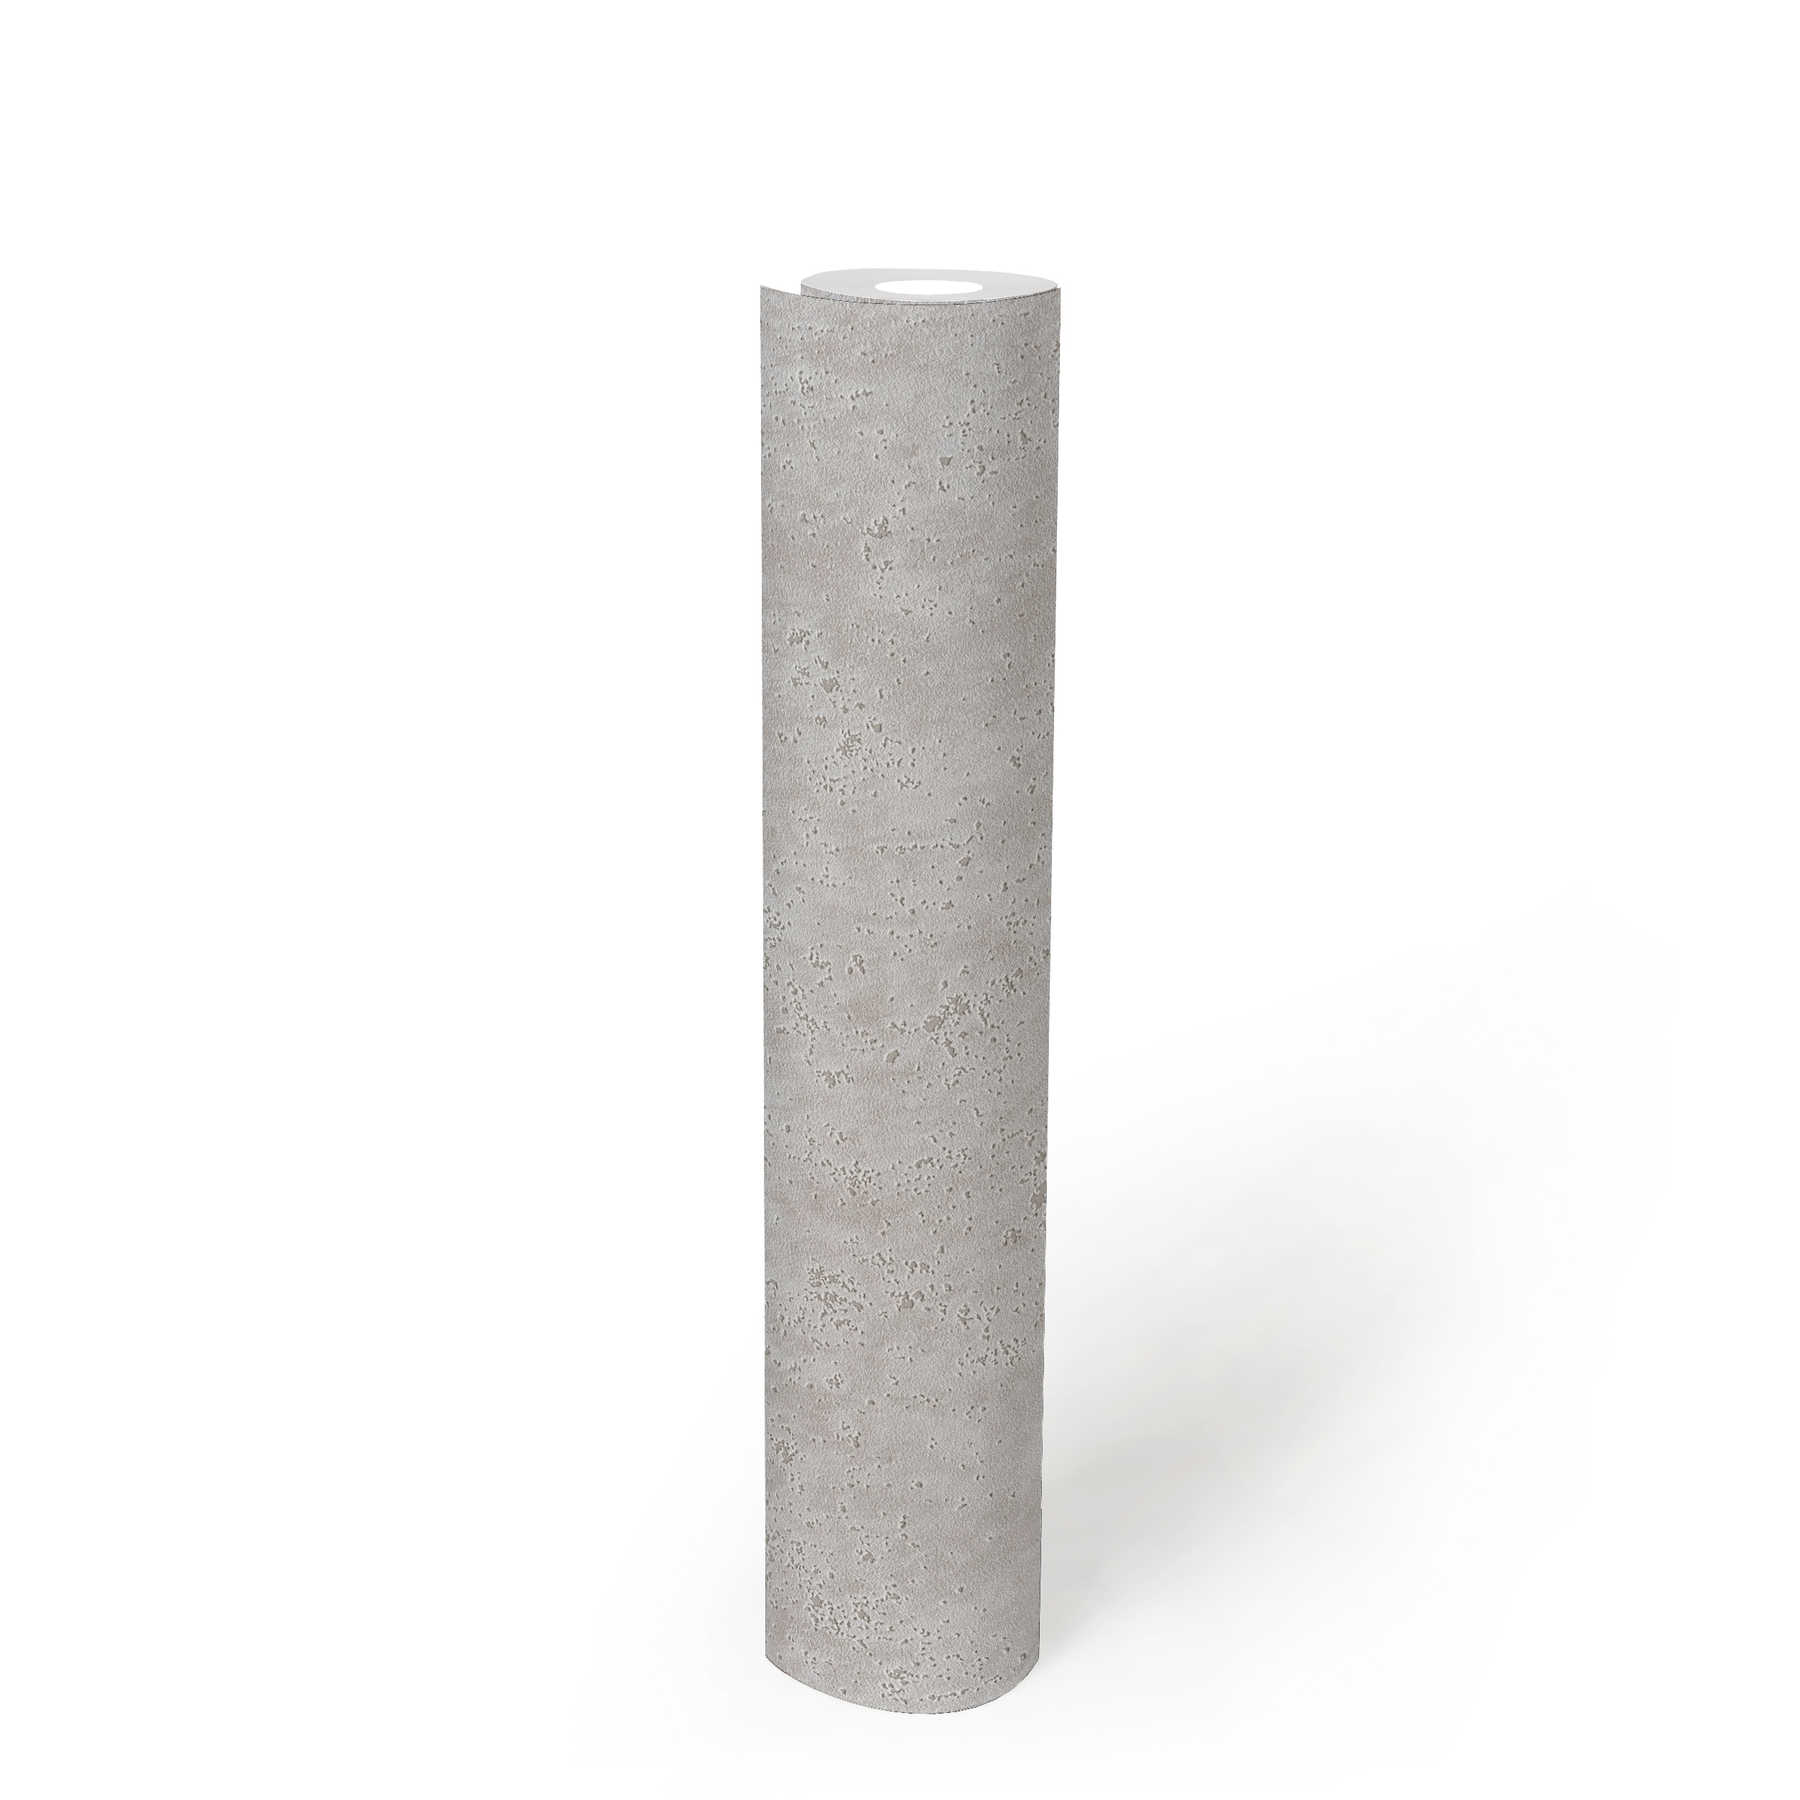             Betonoptik Tapete mit Farb- & Oberflächenstruktur – Grau
        